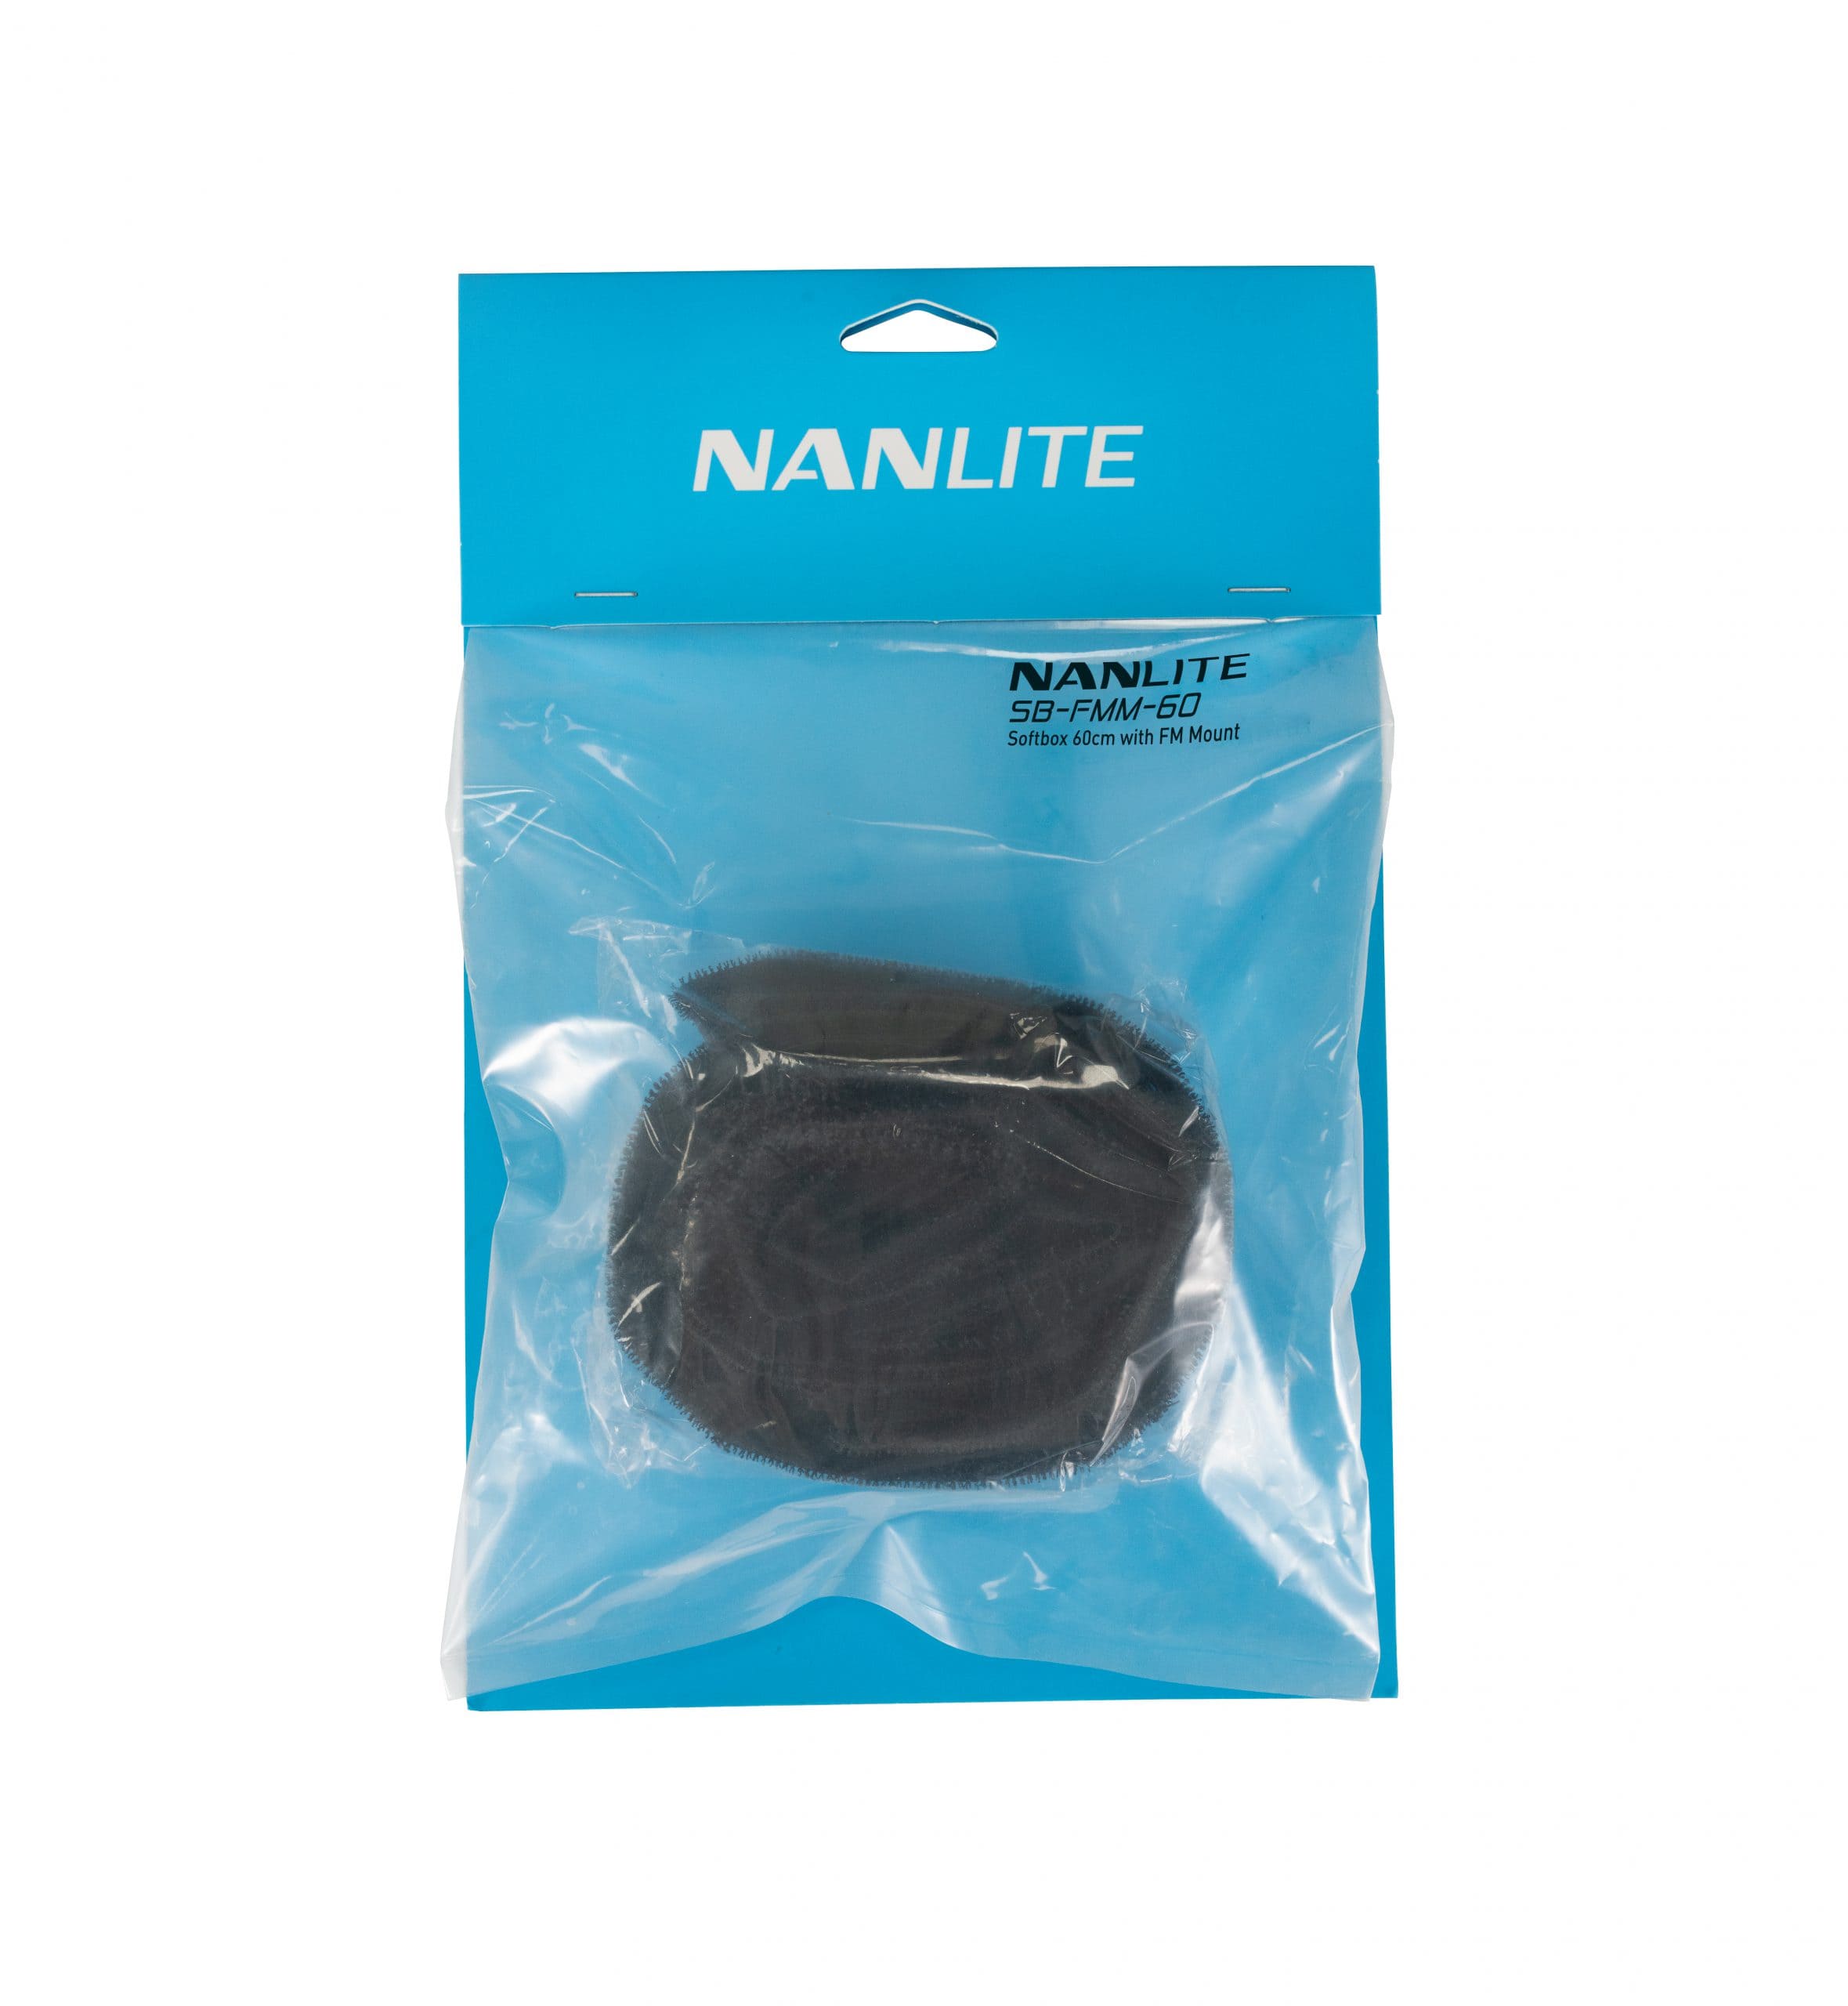 Tổ ong softbox Nanlite Forza 60 SB-FZ60